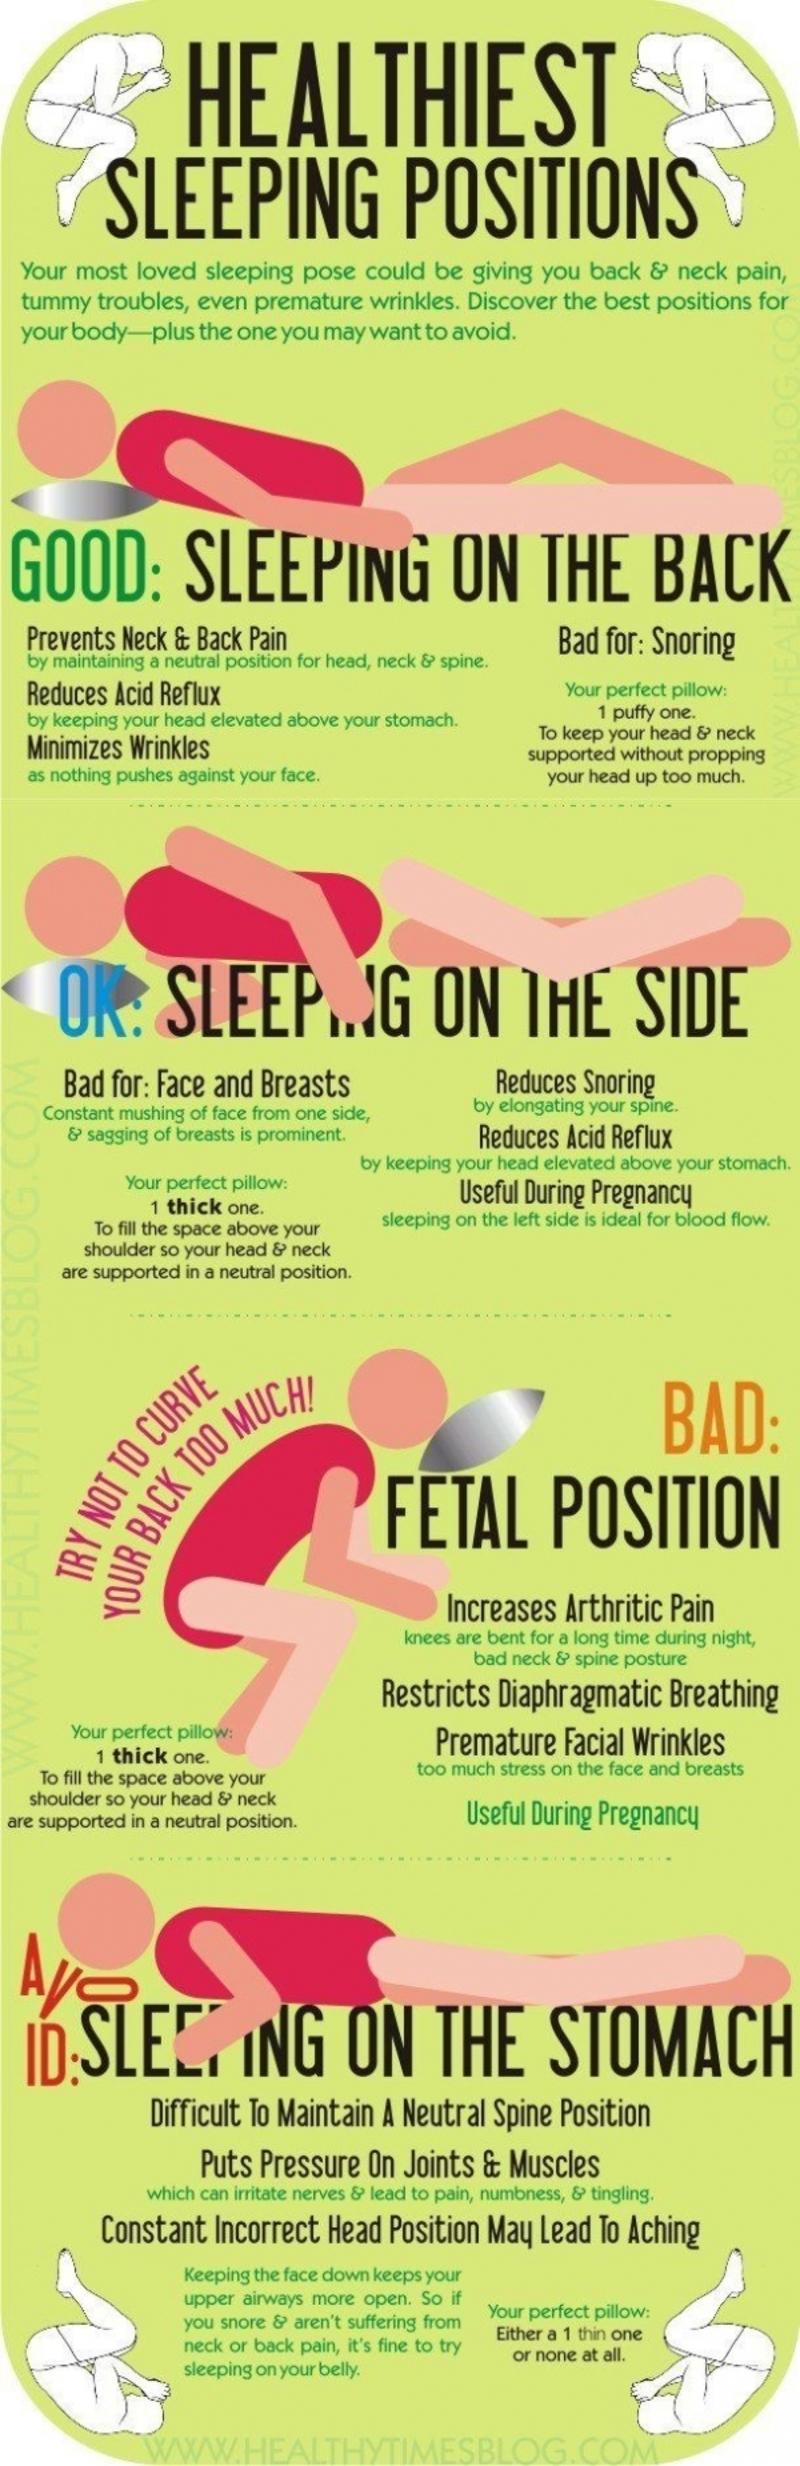 Healthiest Sleeping Positions